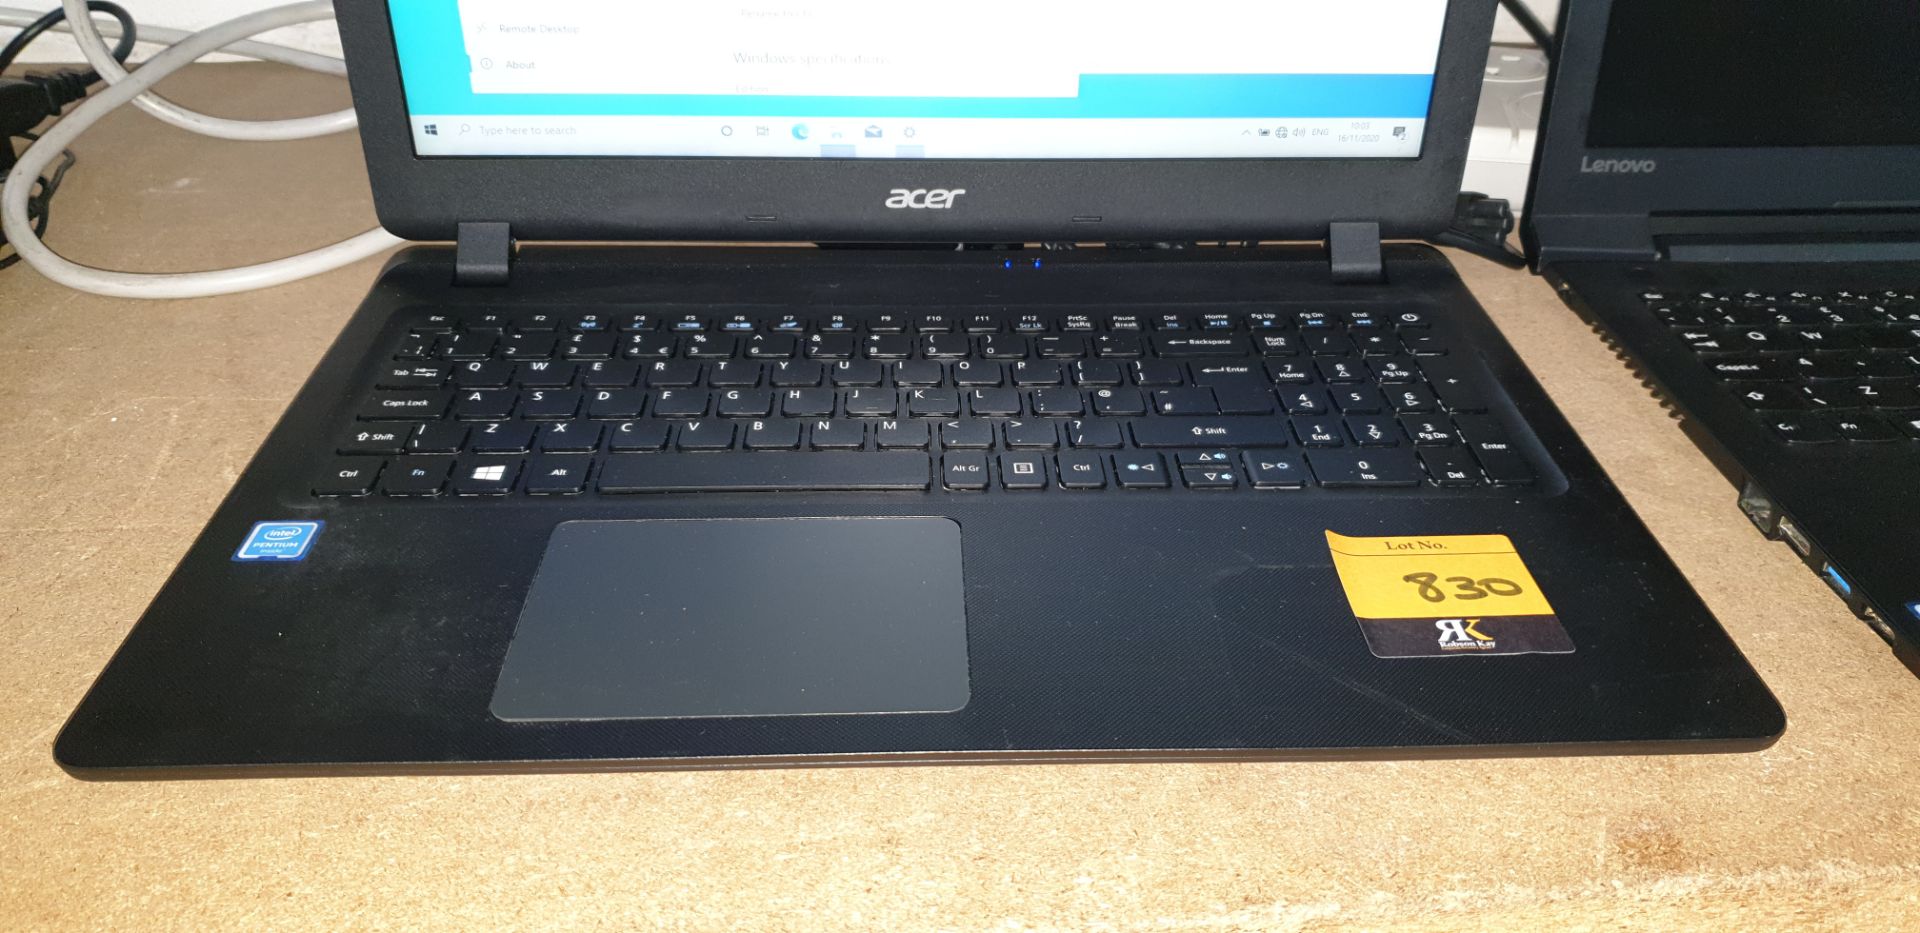 Acer notebook Acer Aspire ES1-533 15.6" Laptop Intel Pentium N4200, 1.1GHz / 2.5GHz Turbo Quad Core - Image 2 of 9